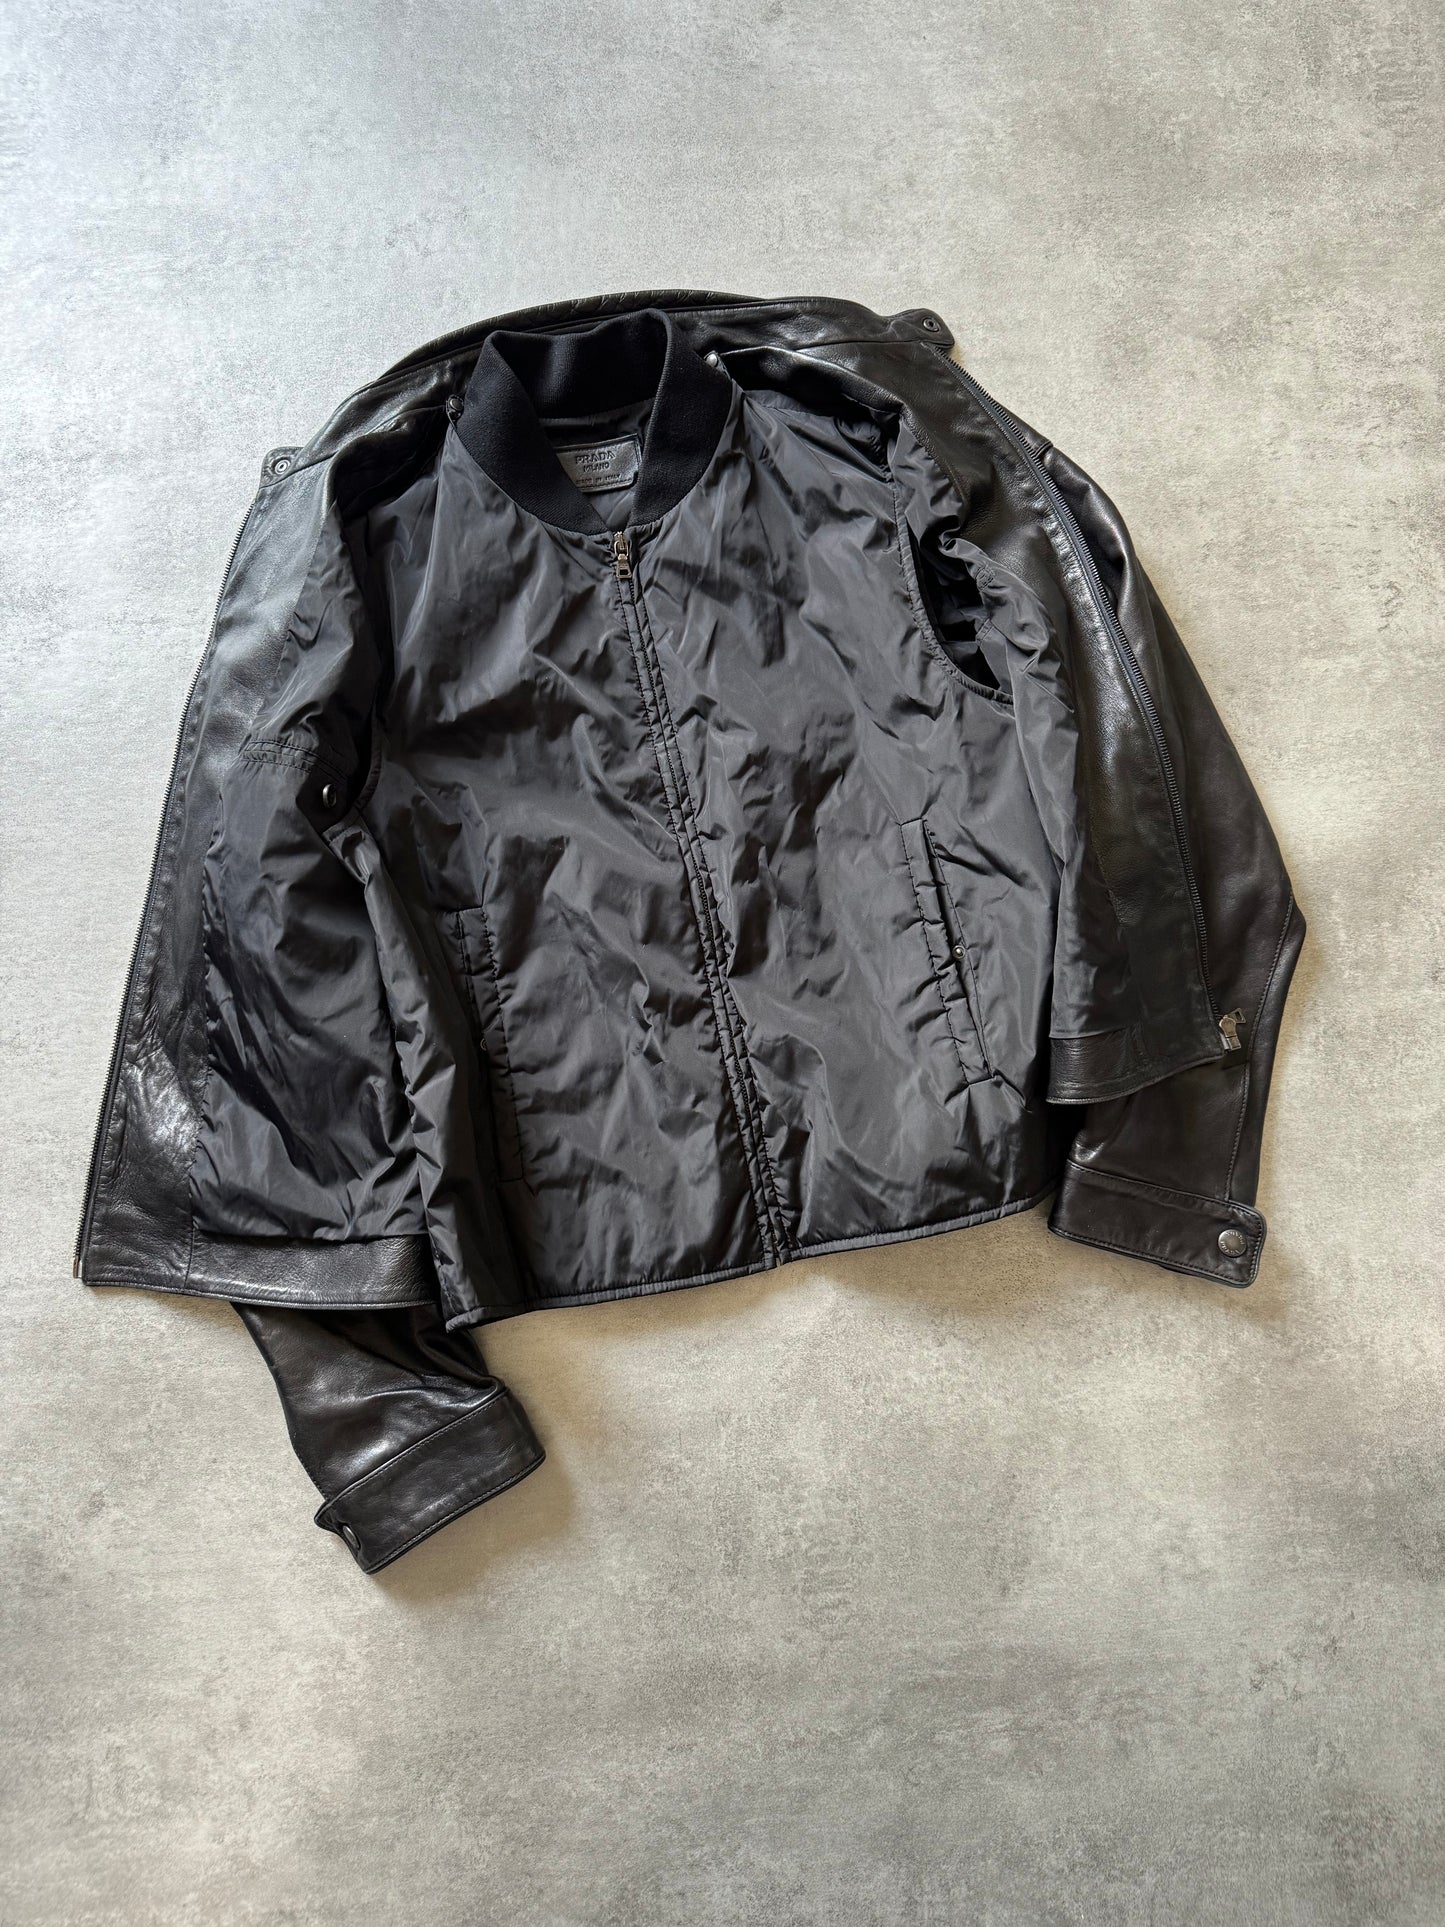 FW2008 Prada Premium Biker Black Leather Jacket (M) - 7